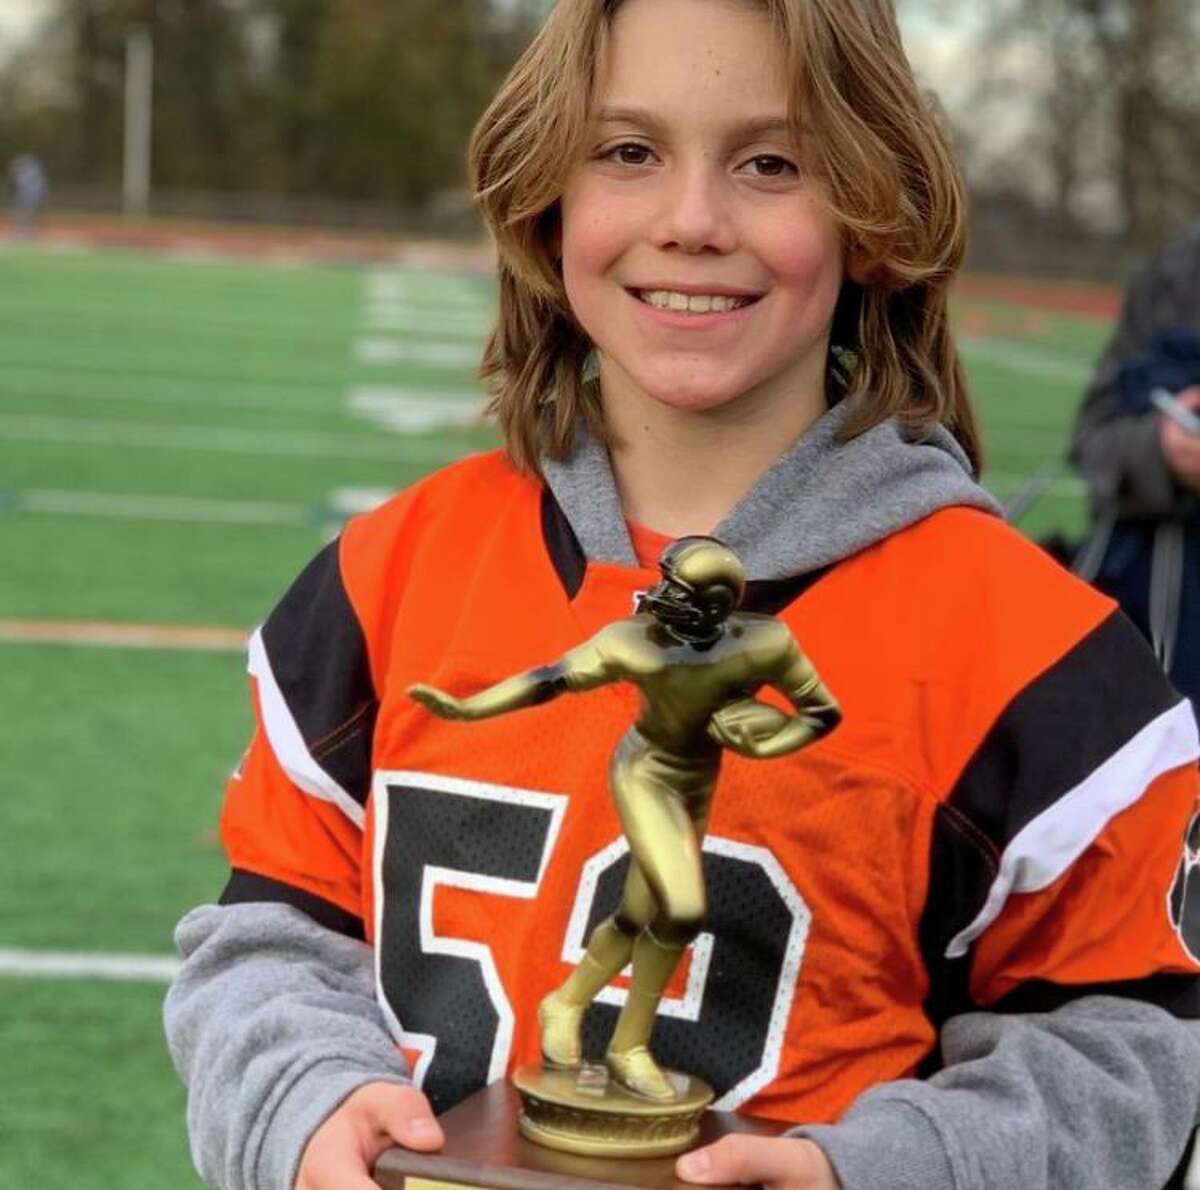 Logan Hale, 13, died on Dec. 30, 2021. He was a fixture in Ridgefield’s youth football organization.